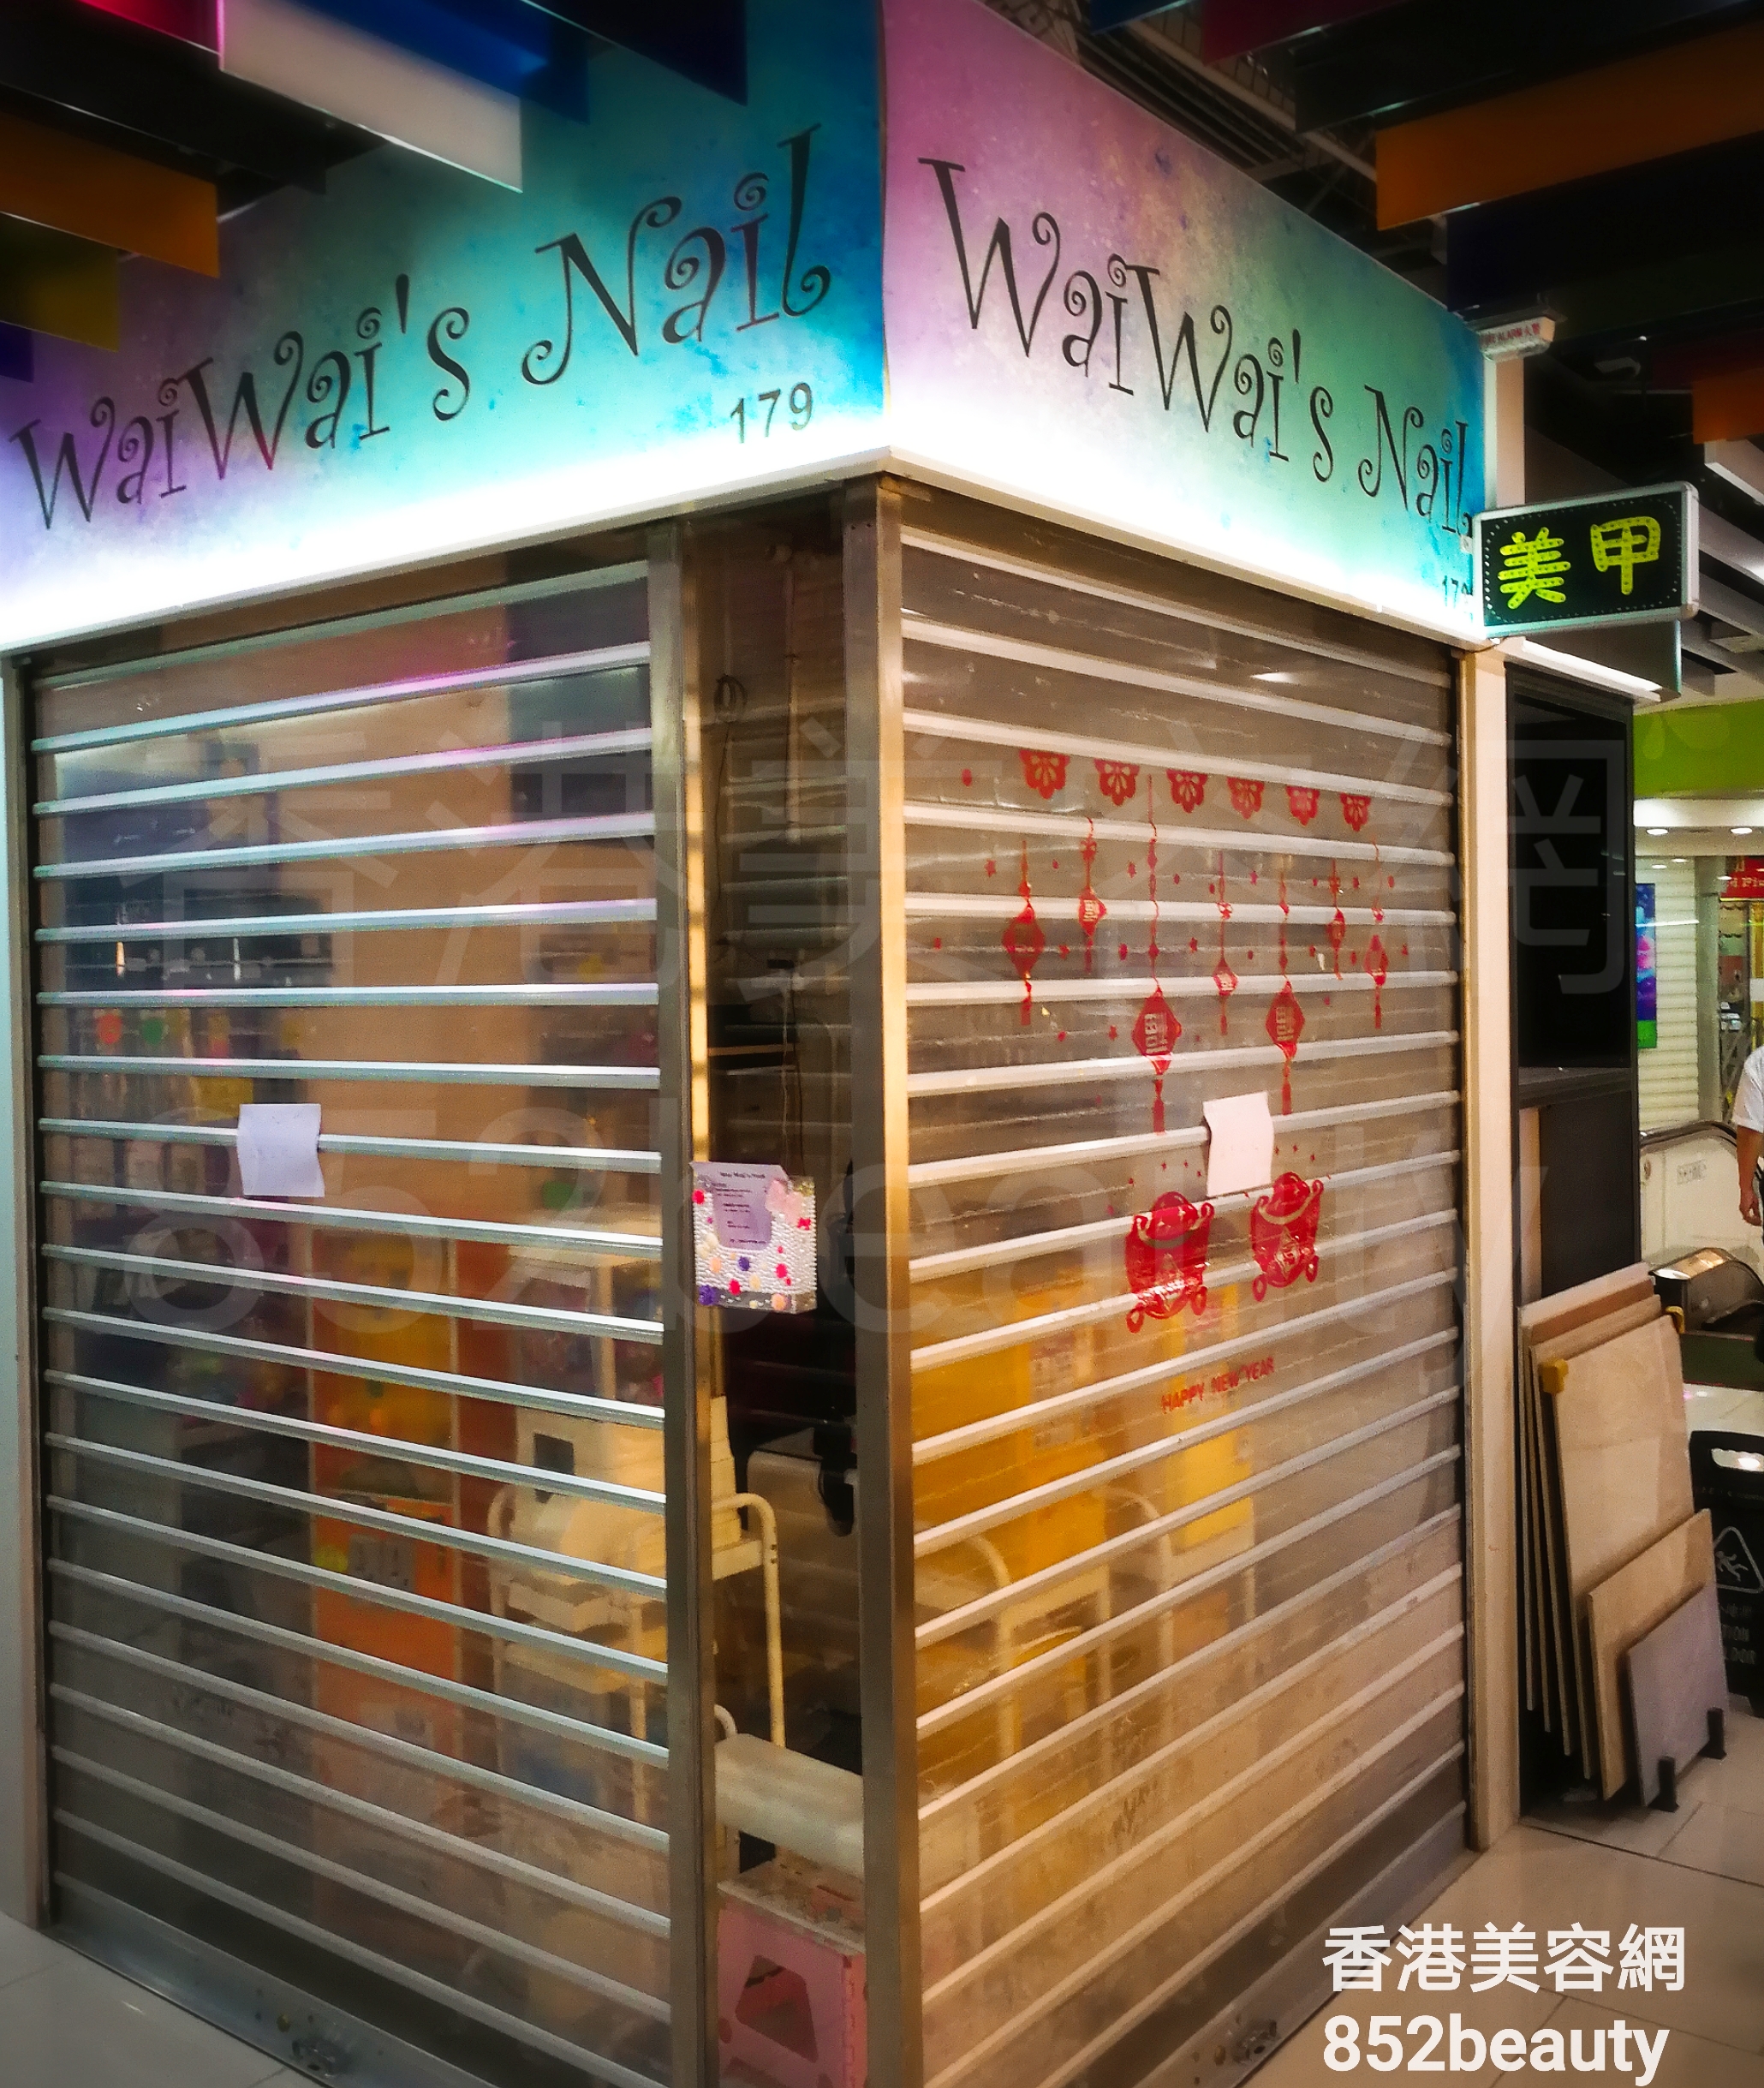 香港美容網 Hong Kong Beauty Salon 美容院 / 美容師: Wai Wai's Nail